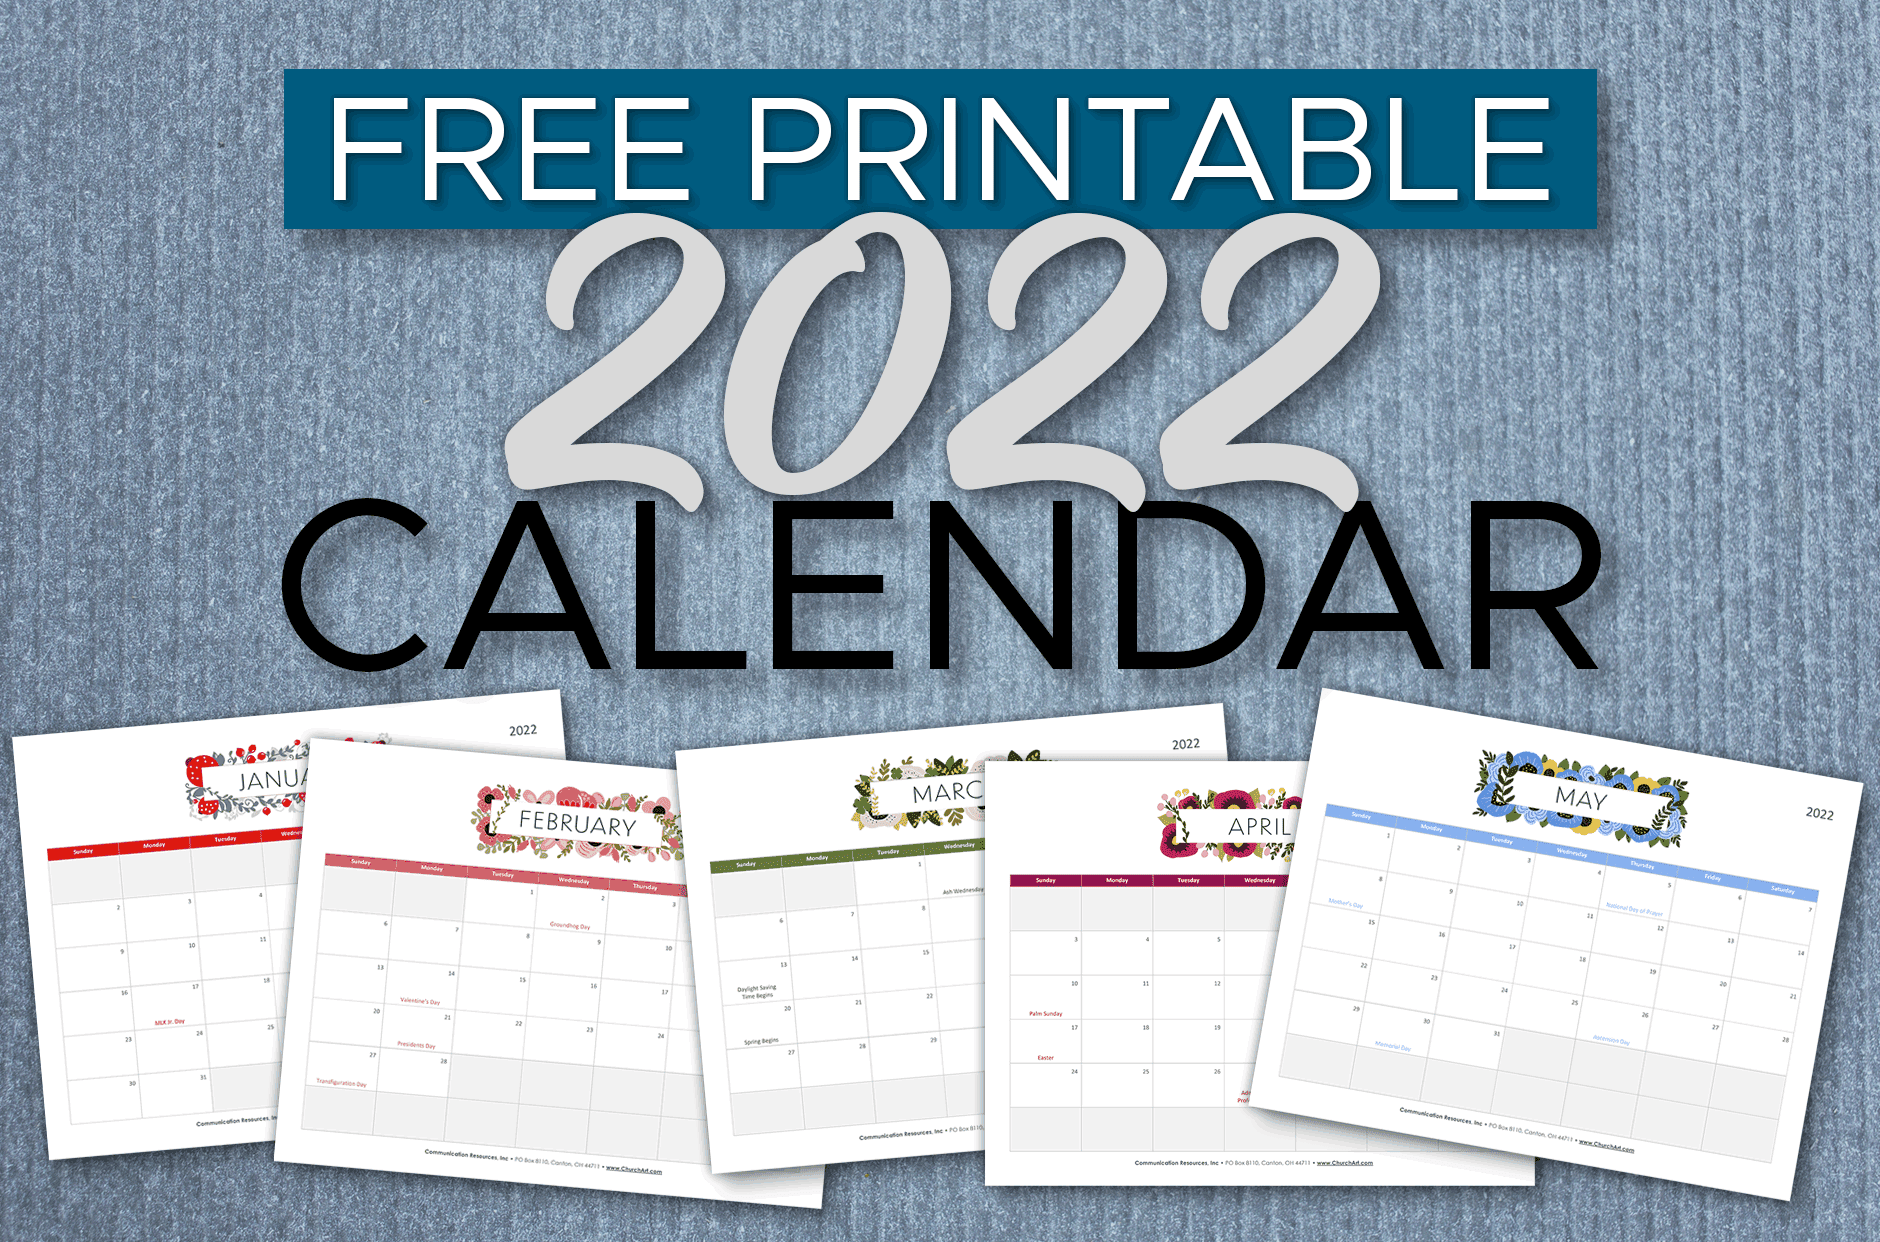 Lutheran Calendar 2022 Free Printable 2022 Church Calendar | Churchart.com Blog